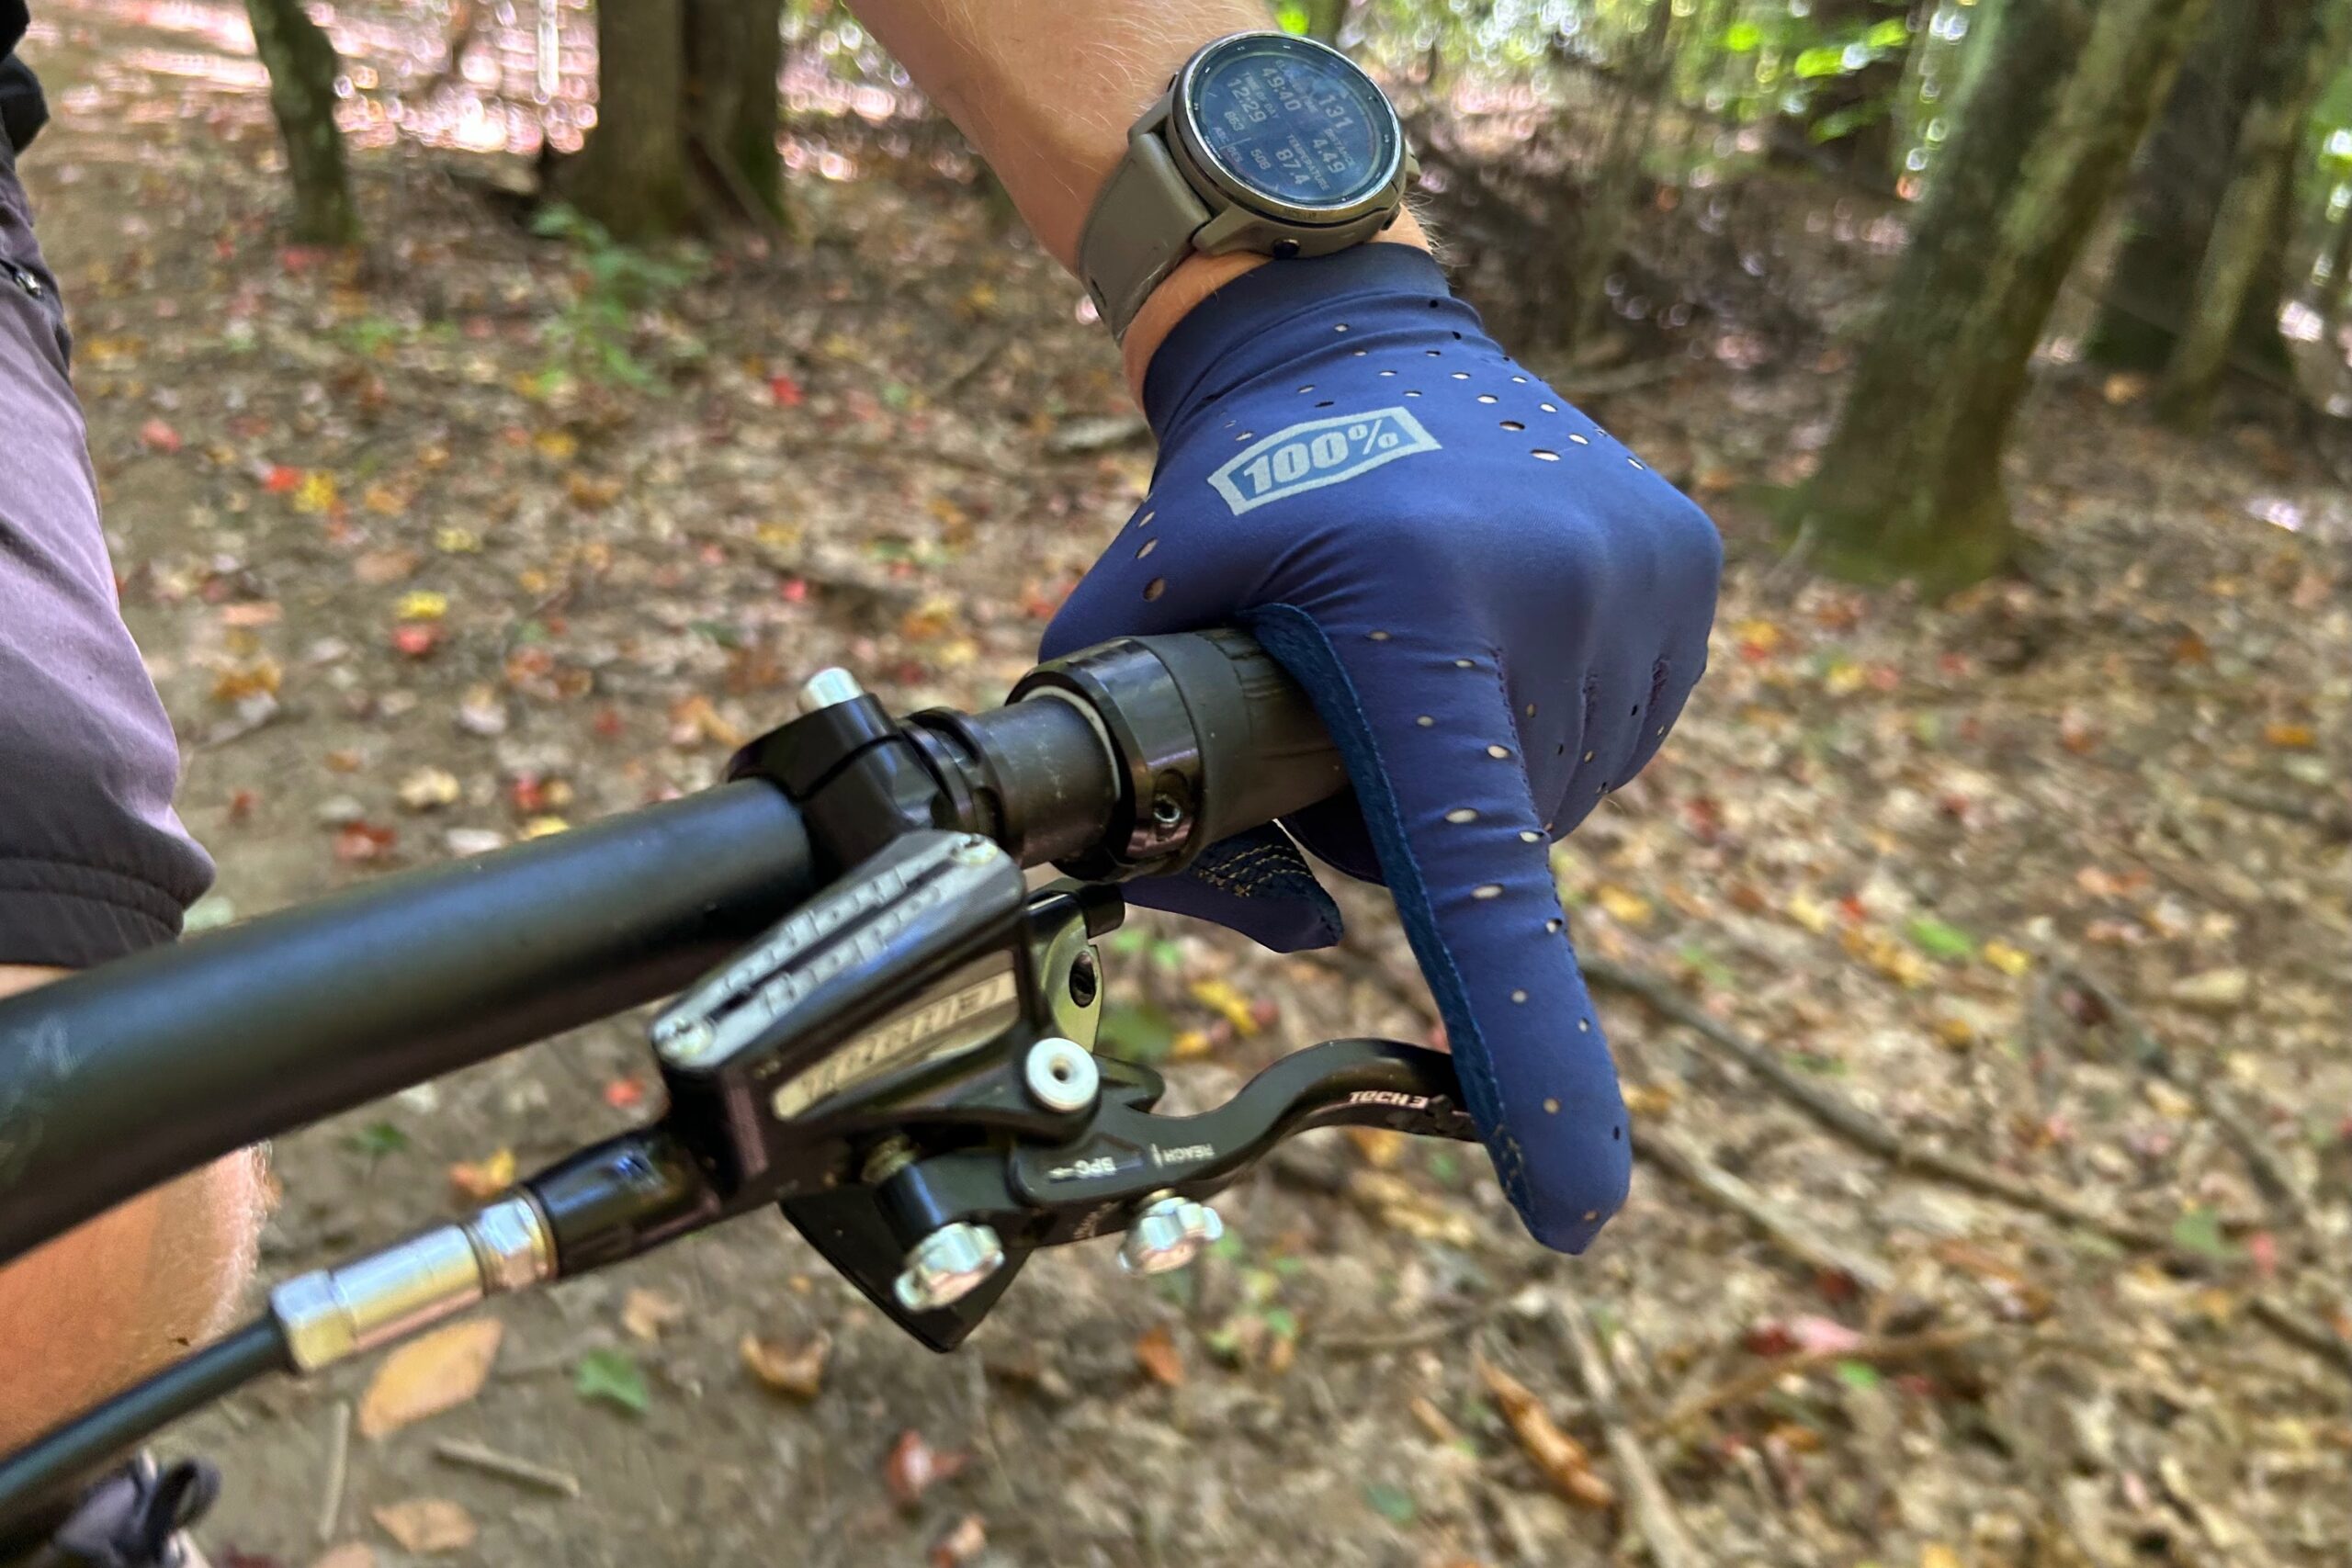 100 Sling mountain bike gloves holding a mountain bike grip